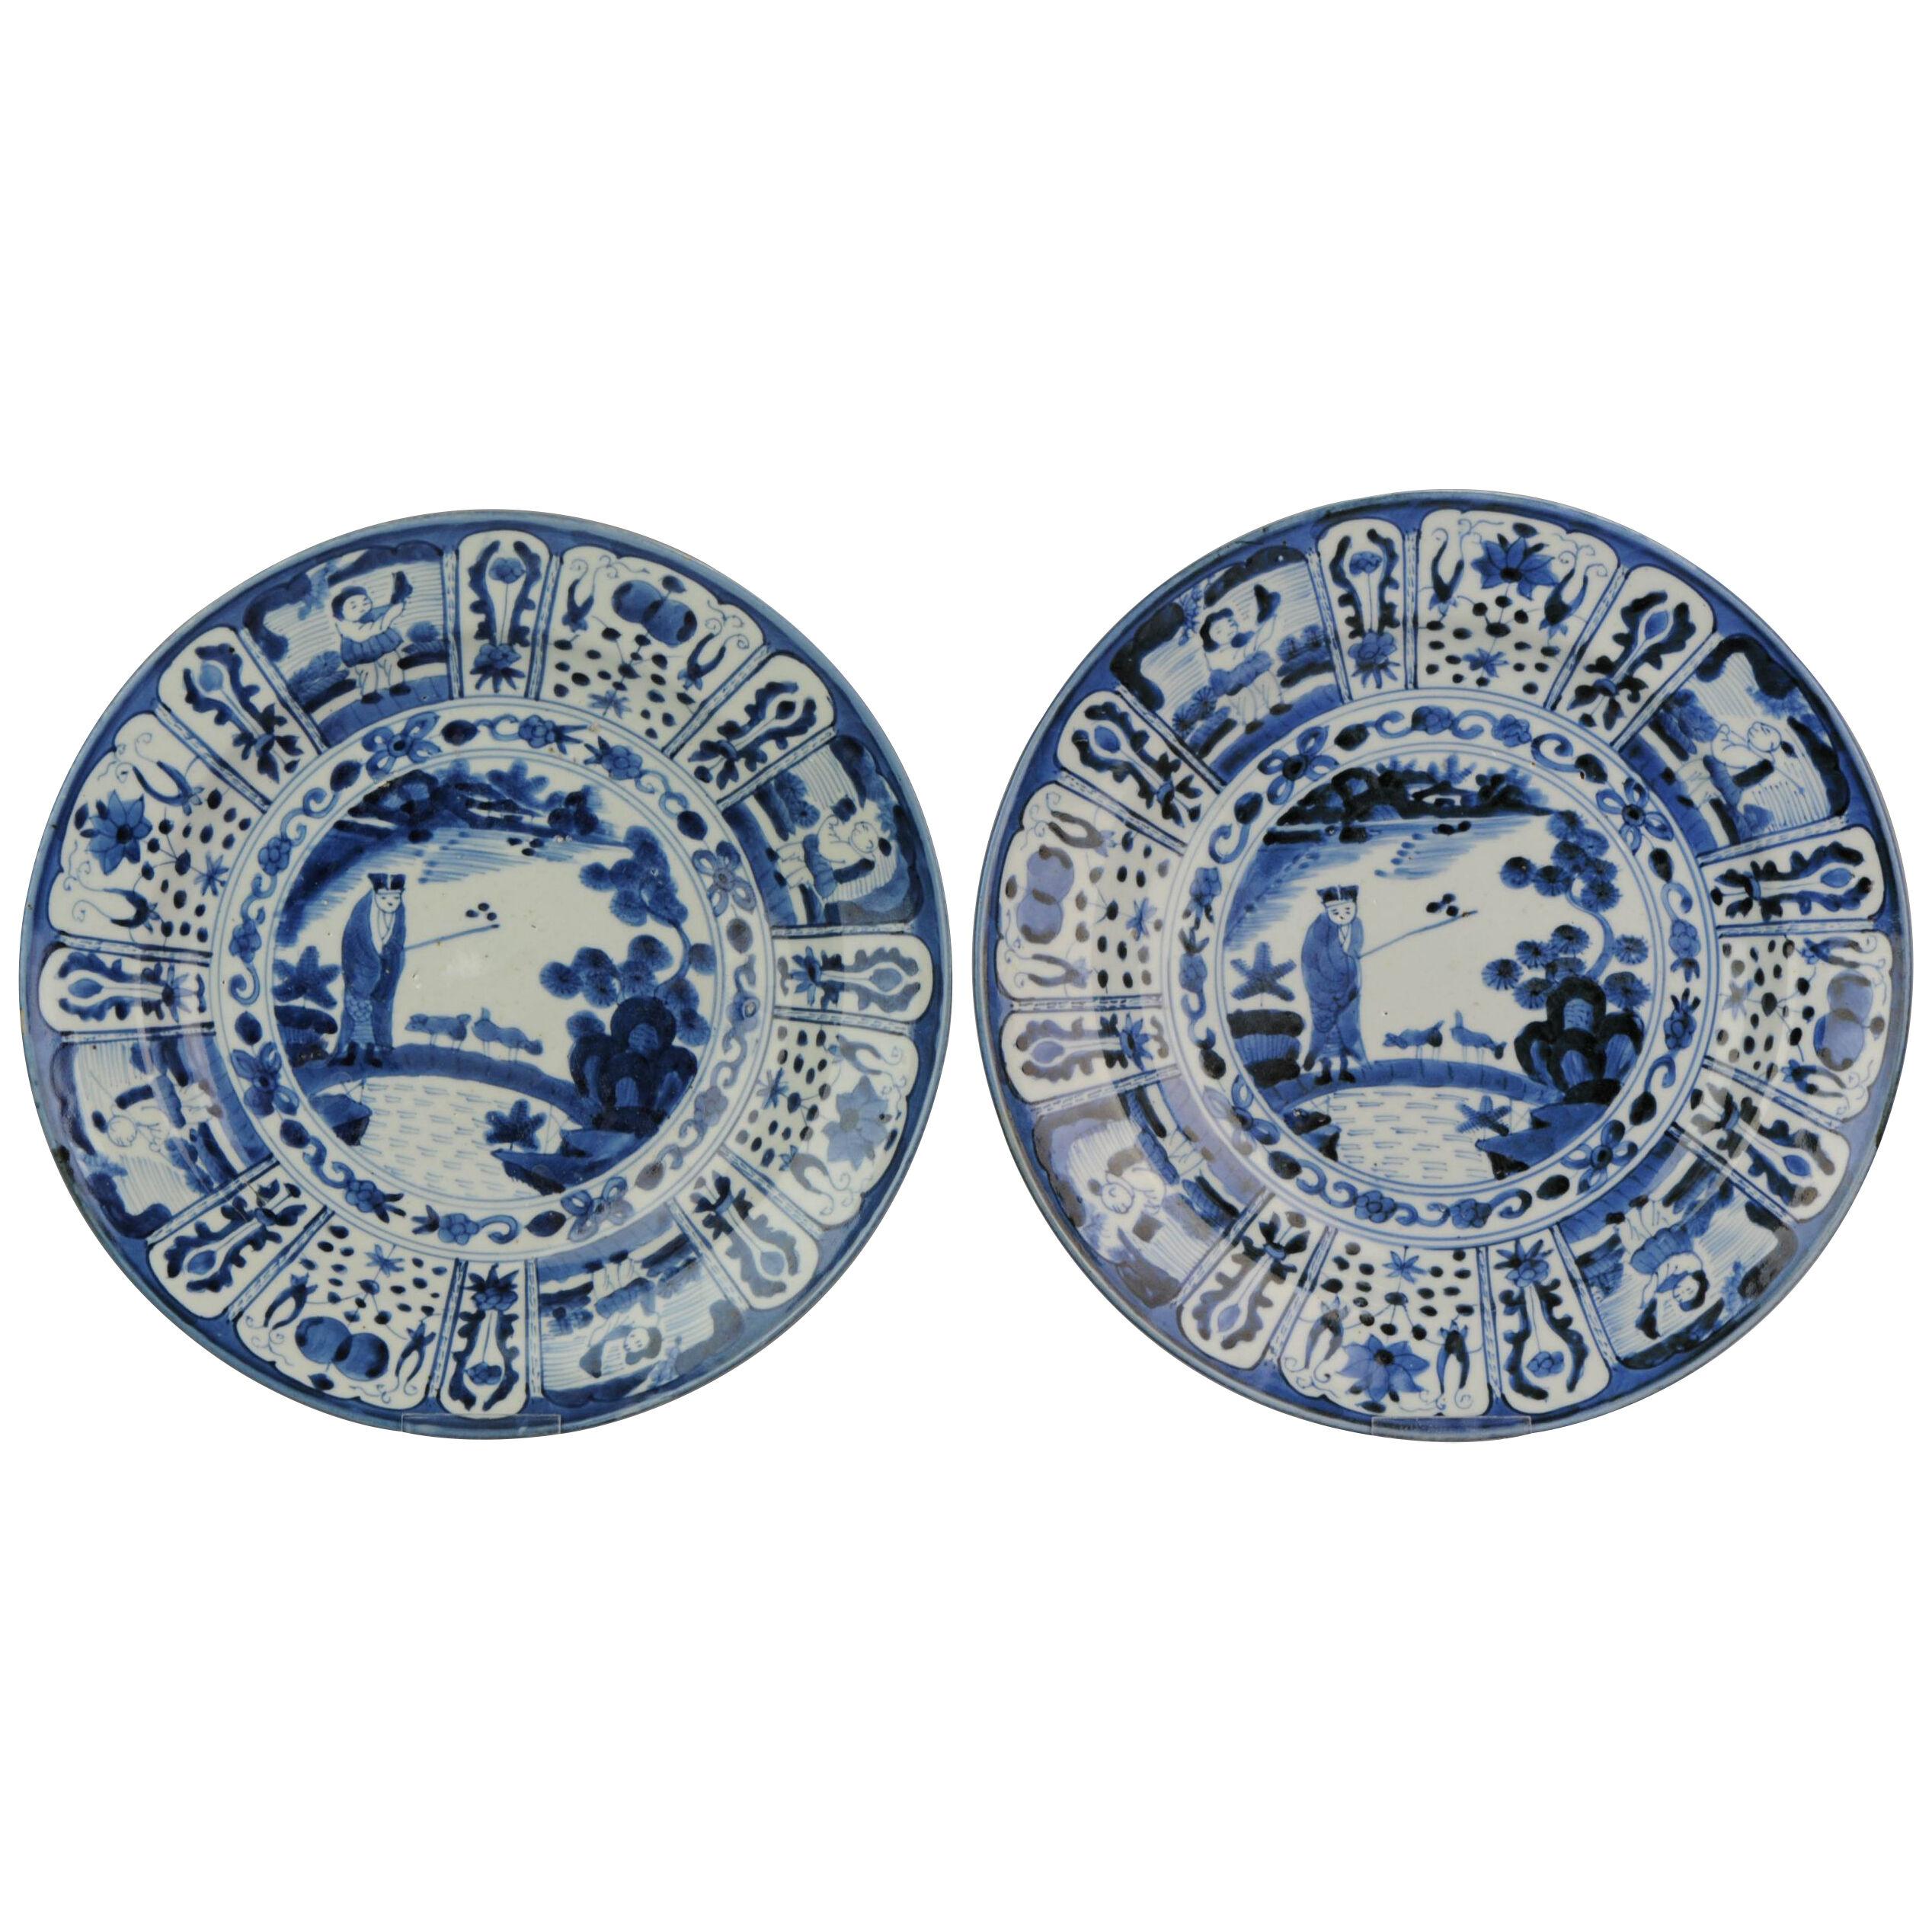 35cm 17/18C Japanese Porcelain Plate Kraak Arita Deer Symbols Antique